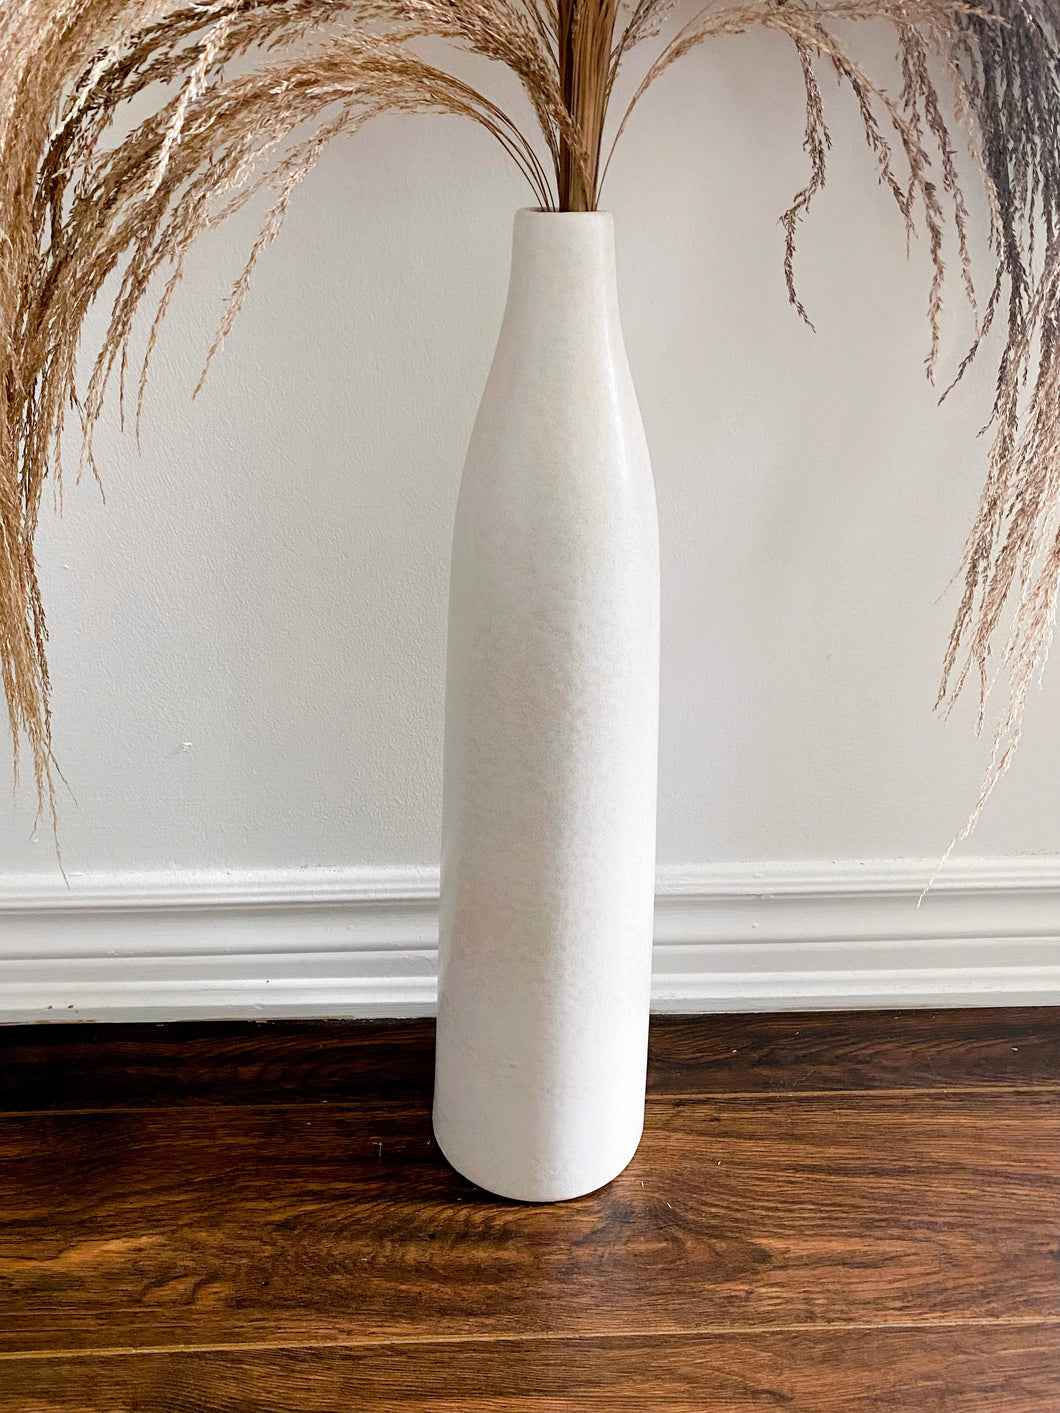 Tall Ceramic Vase | Floor Vase